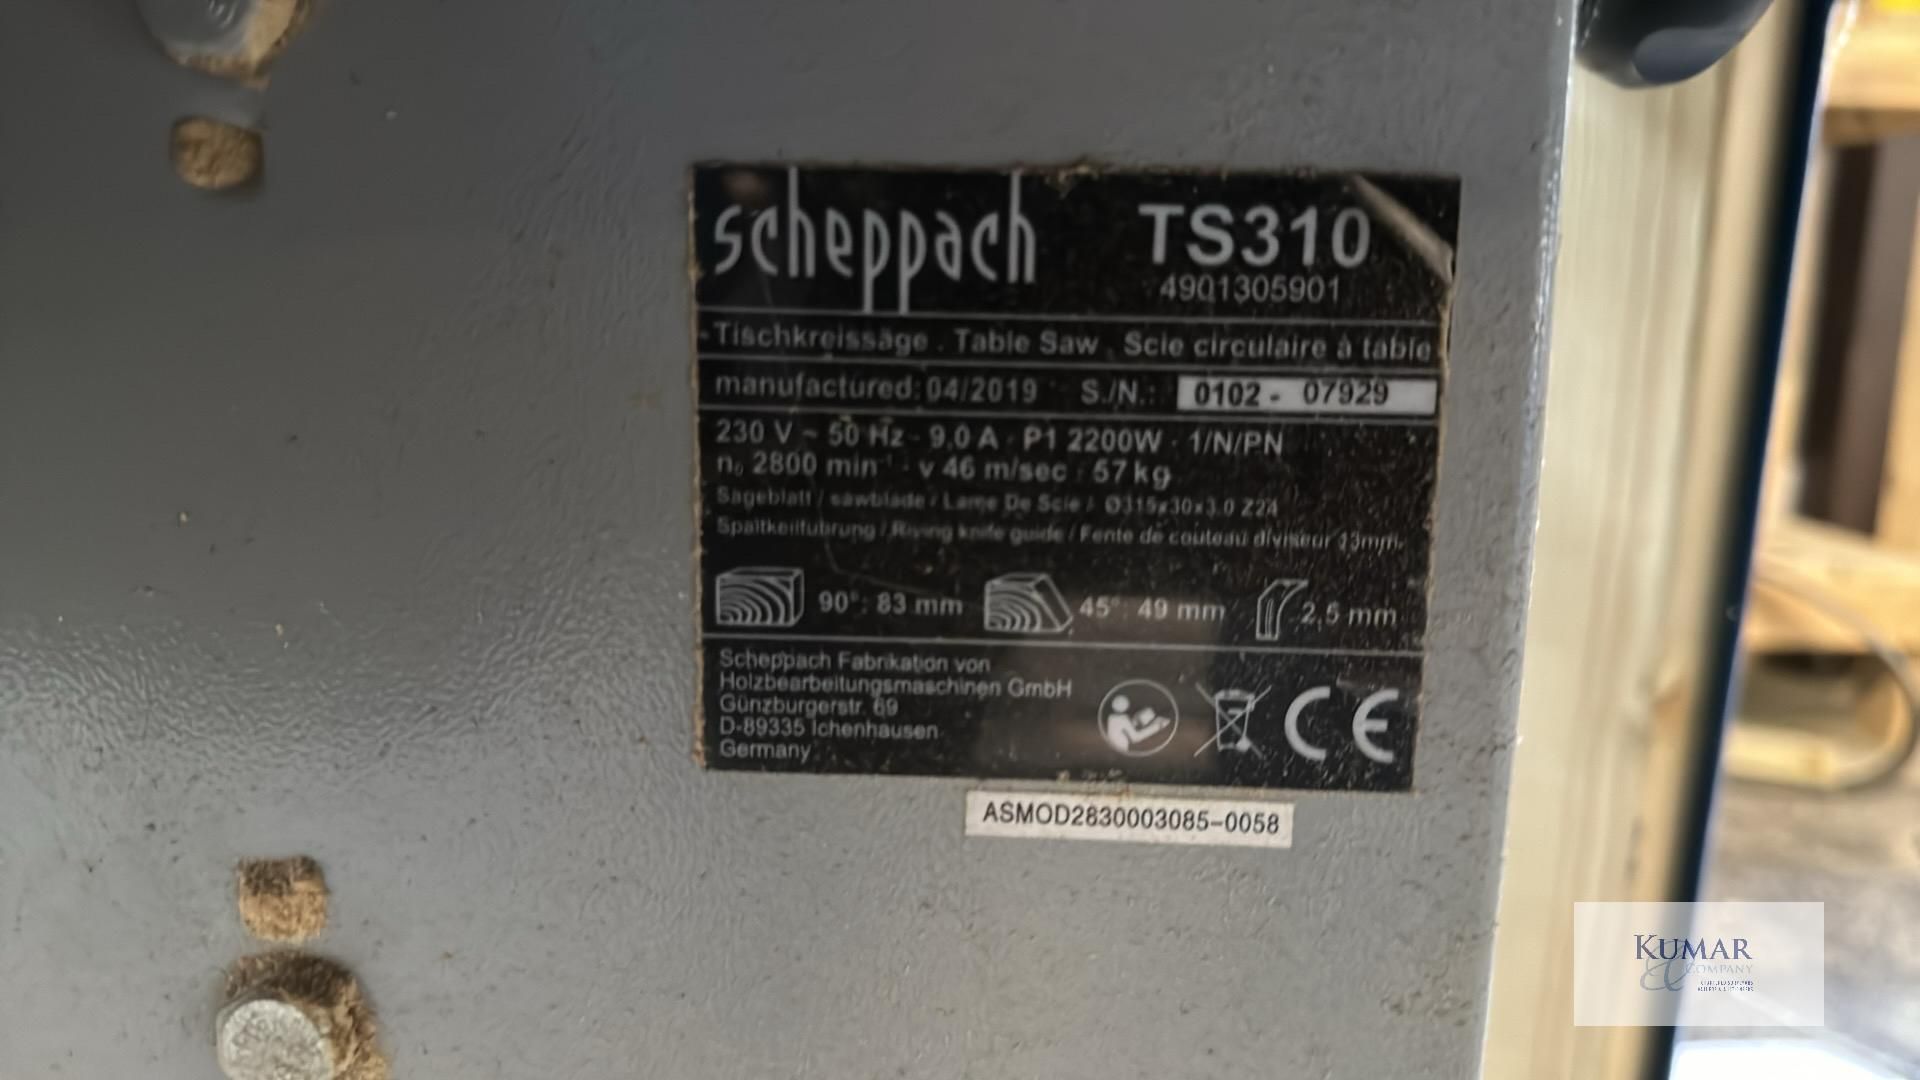 Scheppach TS310 Circular Table Saw, Serial No.0102-07929, (04/2019) - Image 7 of 9